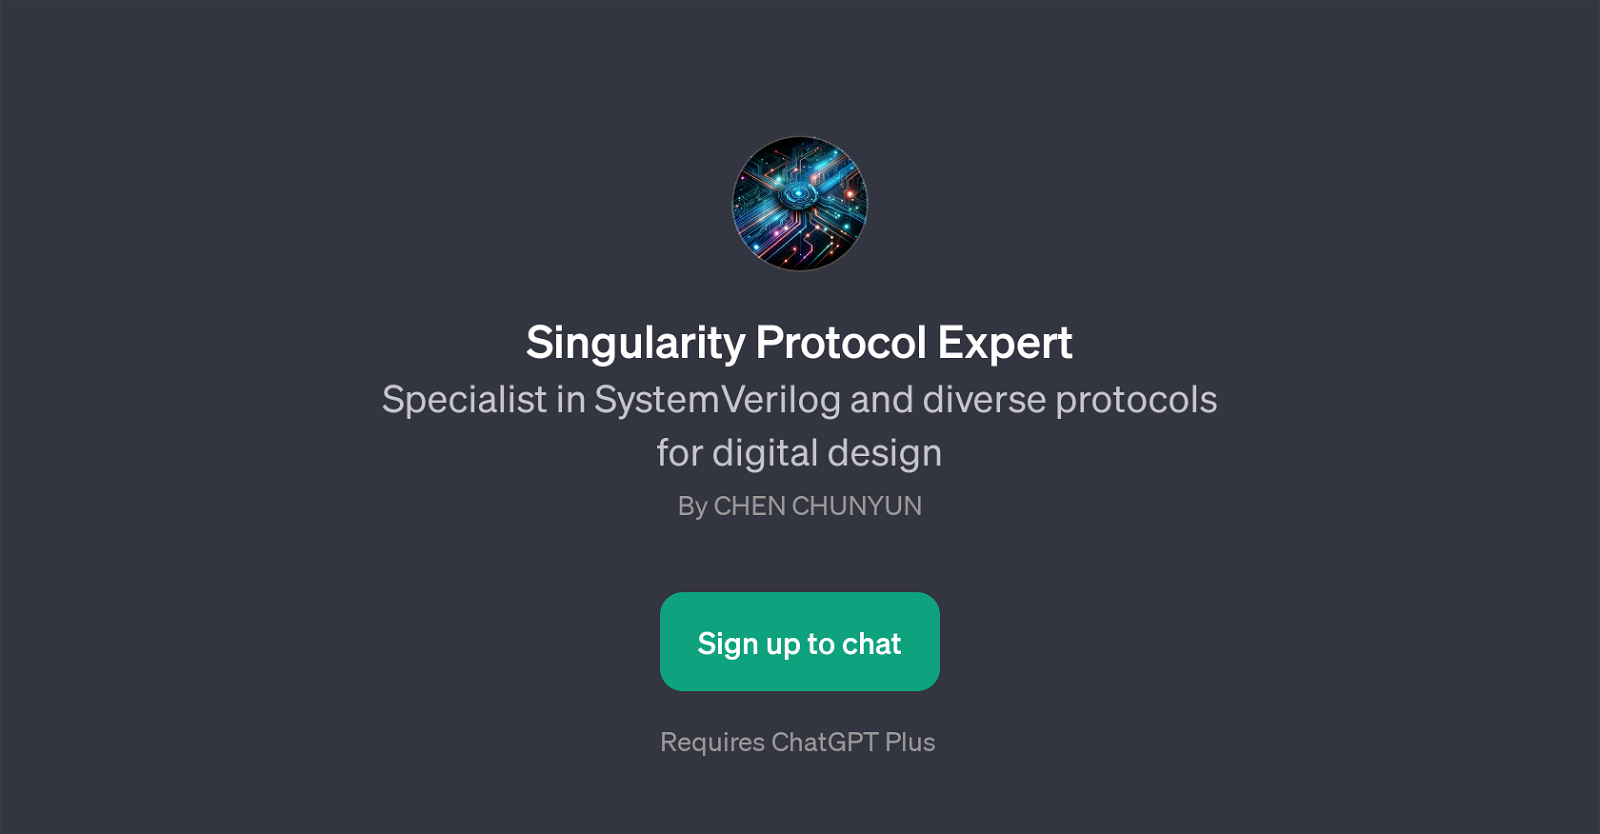 Singularity Protocol Expert website